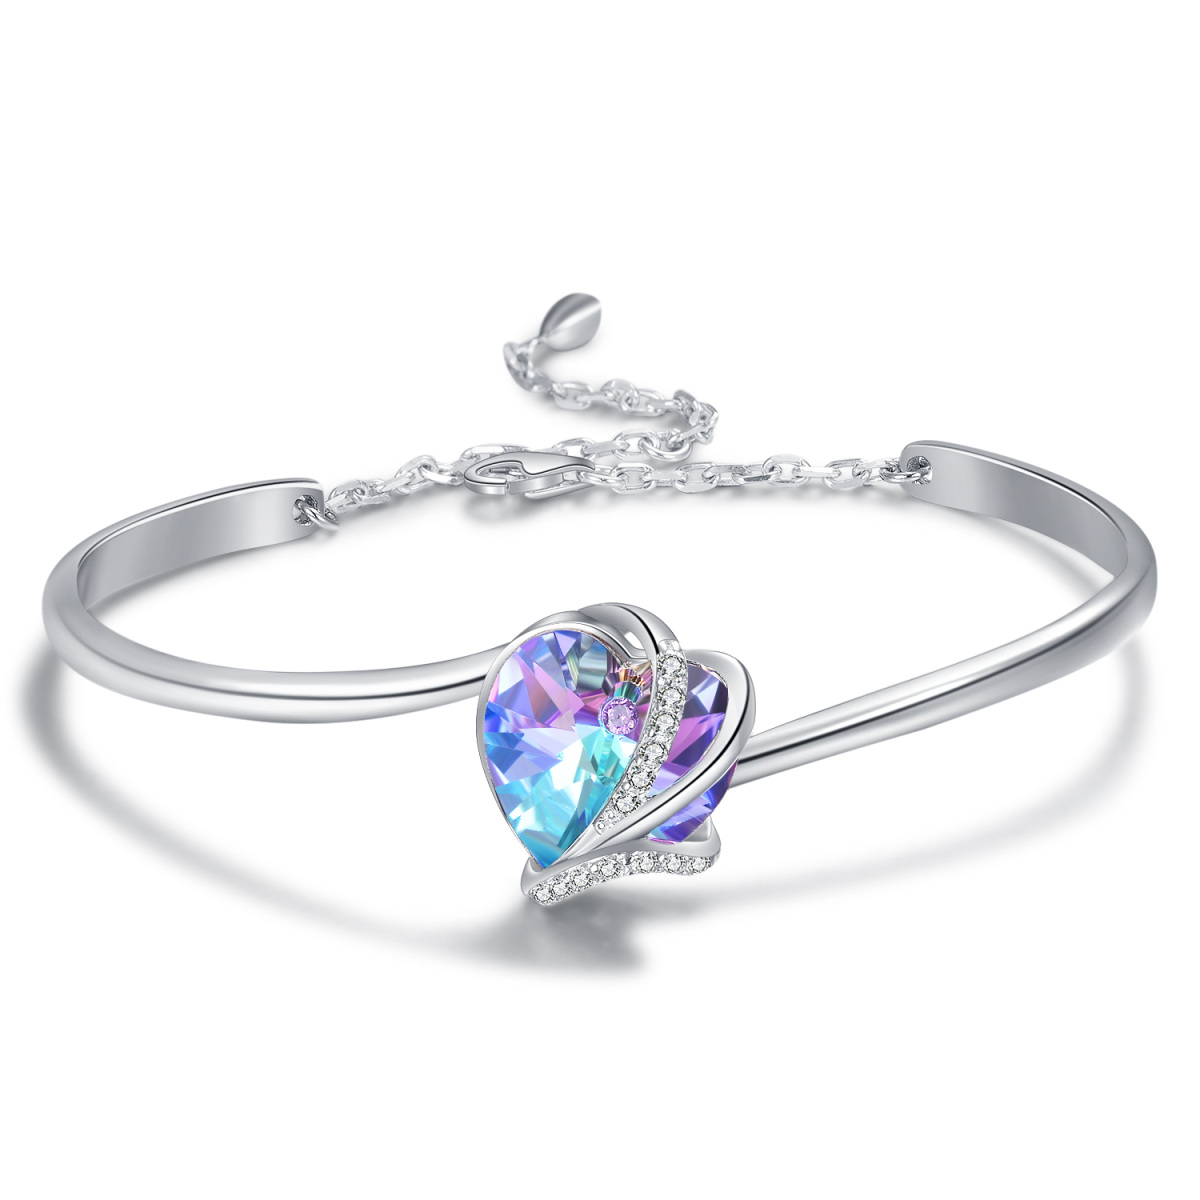 Bracelet en argent sterling avec pendentif en forme de coeur en cristal-1